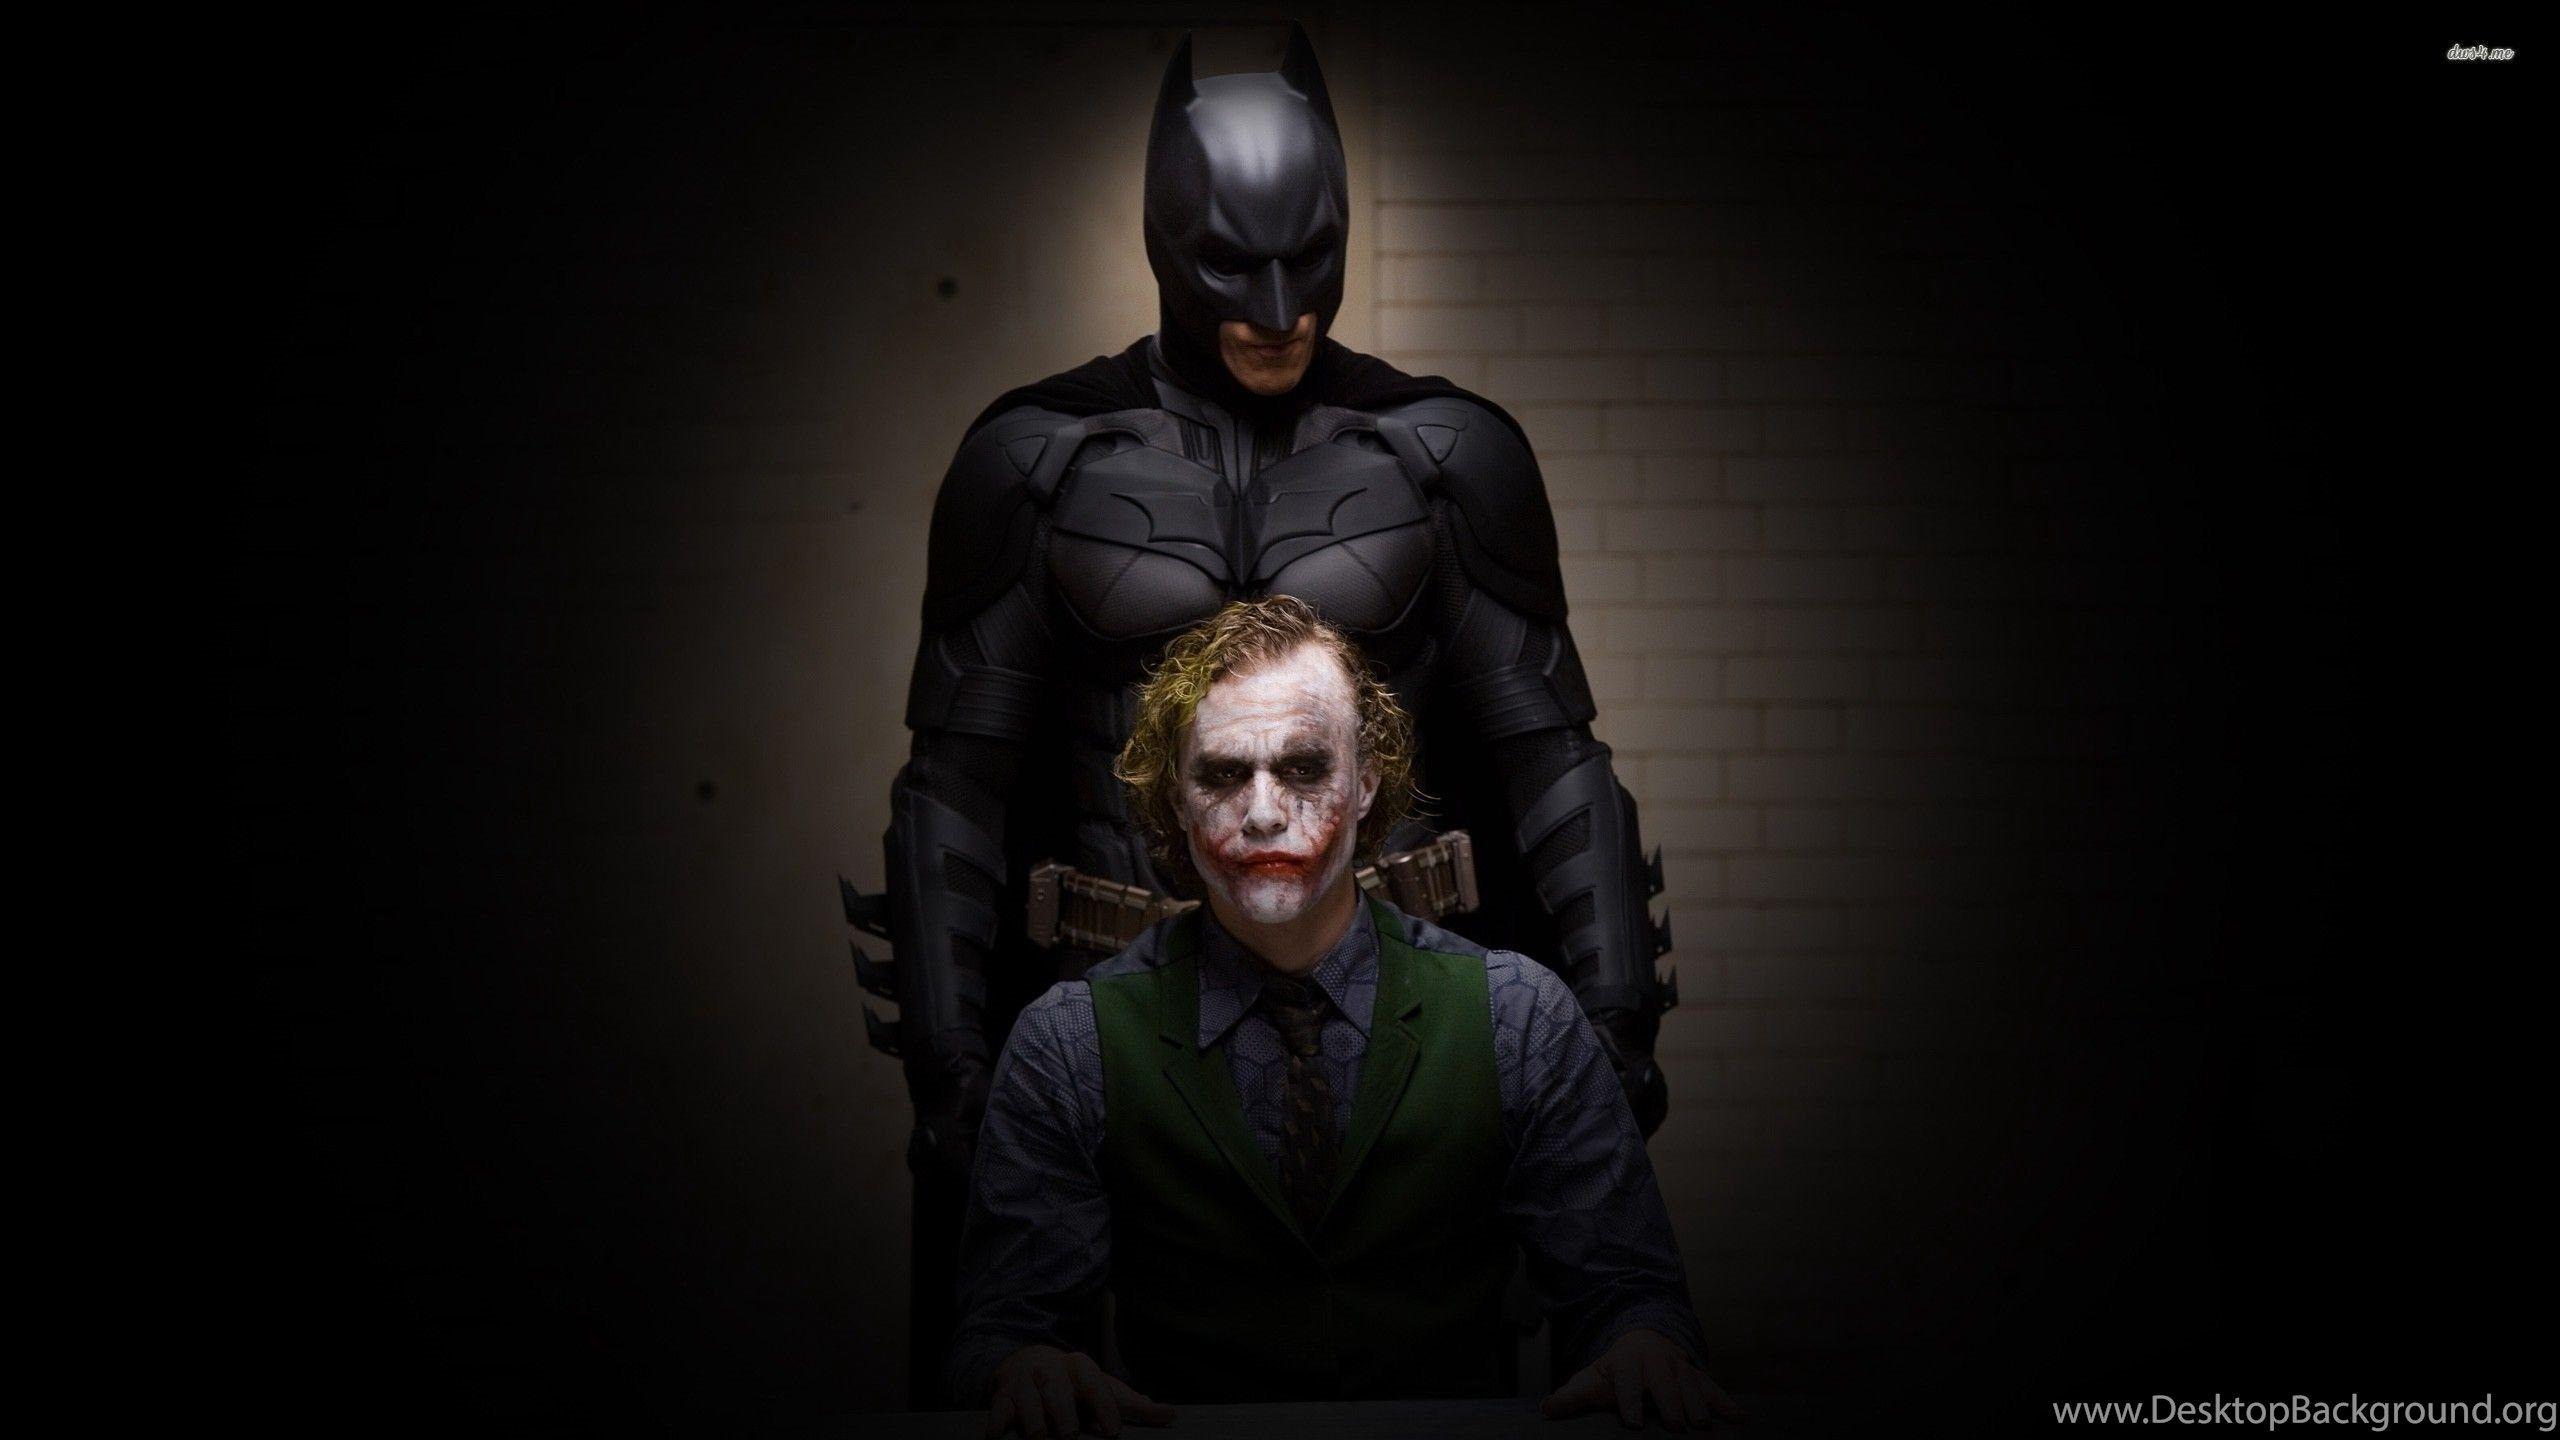 Dark Knight Joker in 4K Ultra HD Wallpapers - Top Free Dark Knight